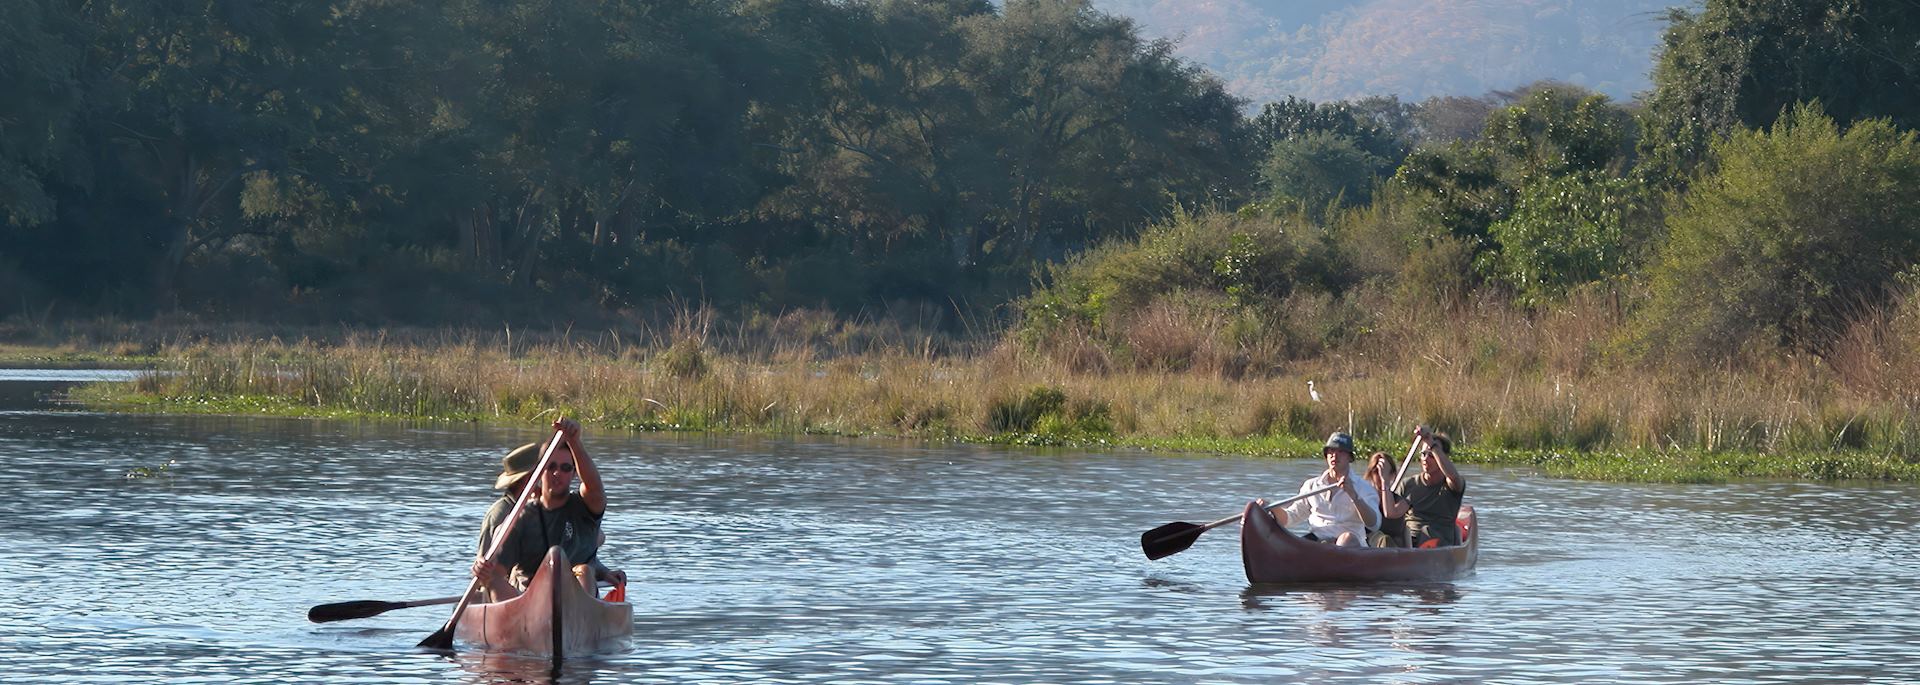 Canoeing in the Lower Zambezi